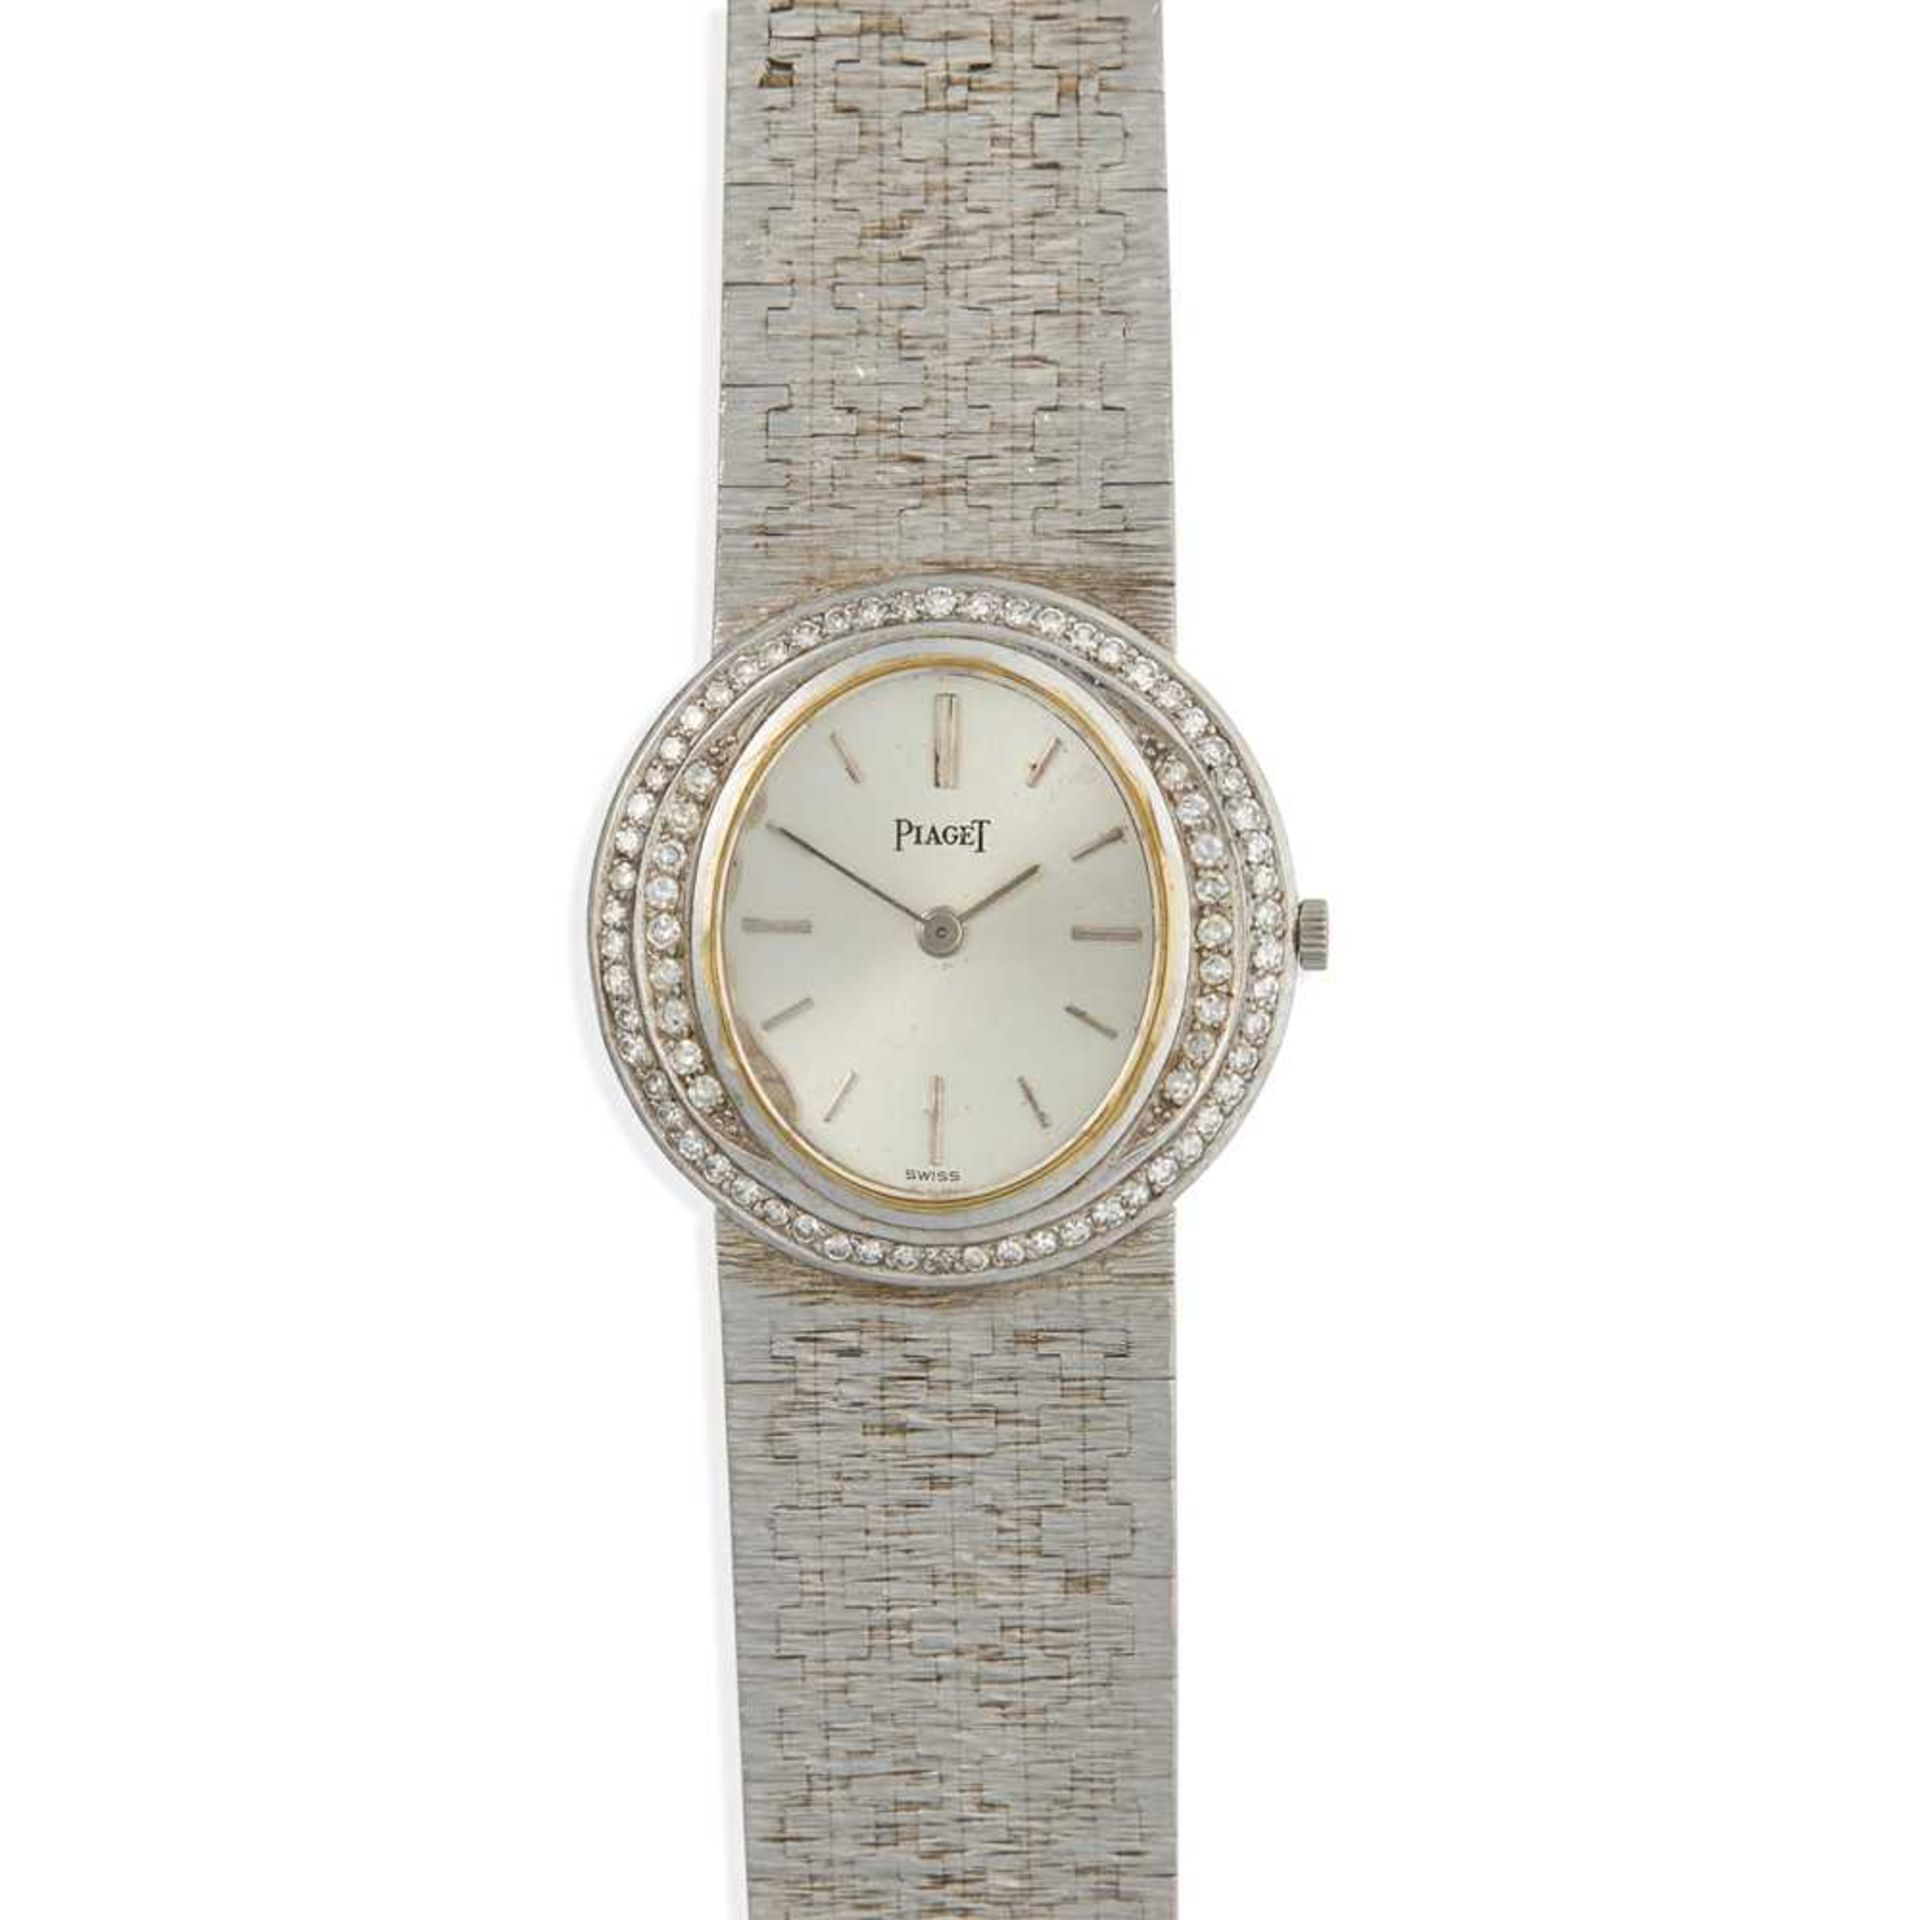 Piaget: a lady's diamond set watch